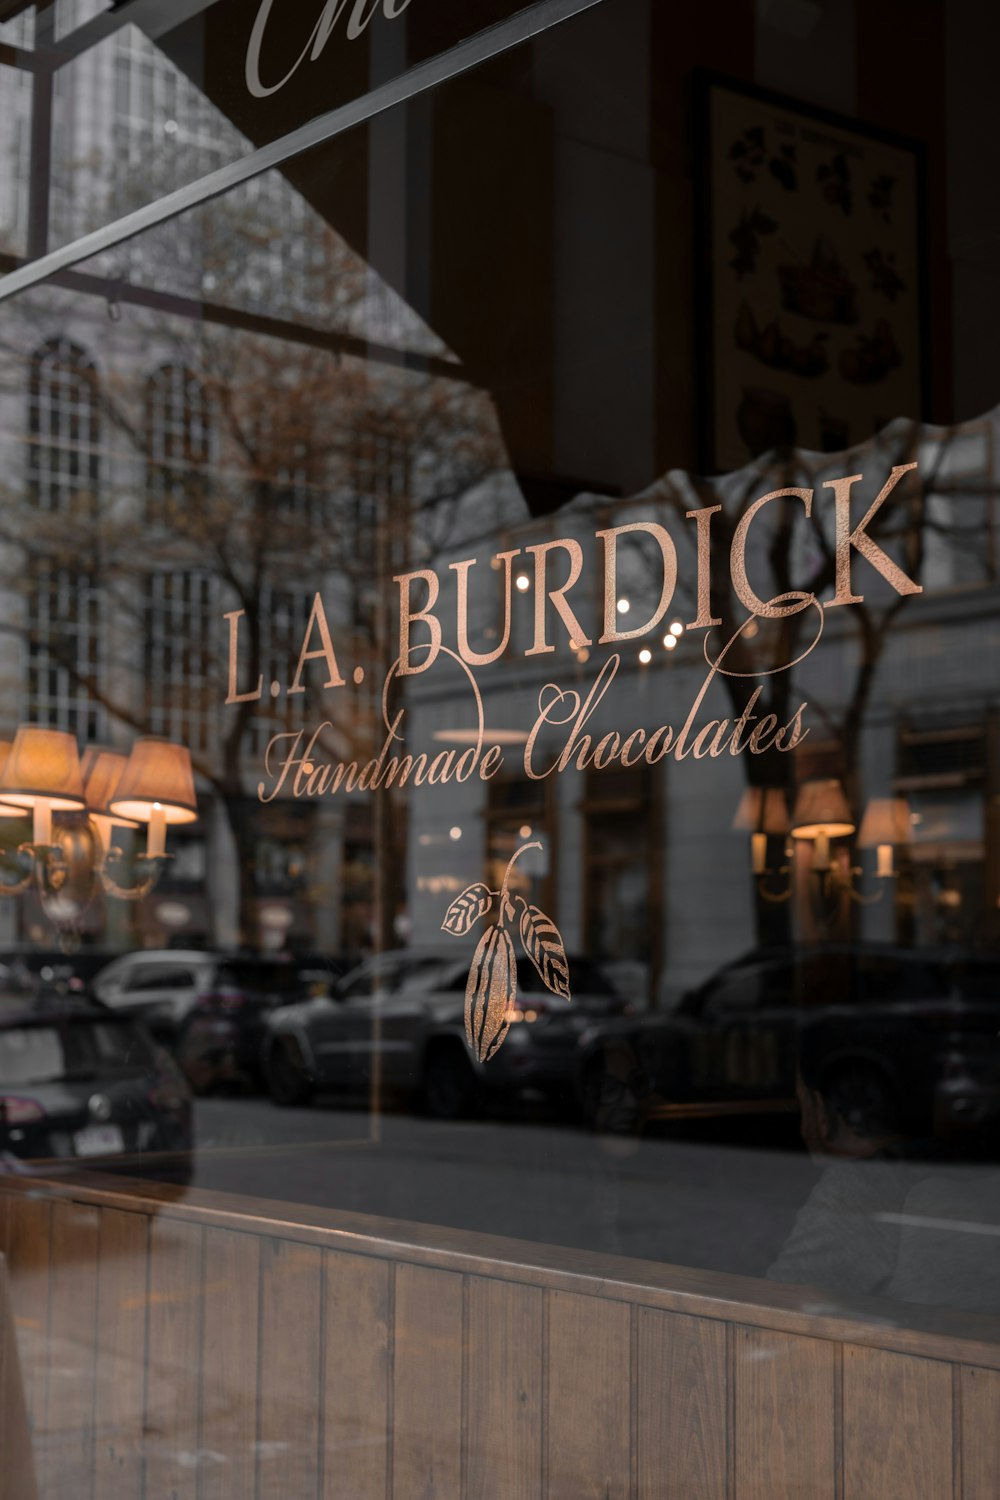 L.A. Burdick handmade chocolates sign on glass window